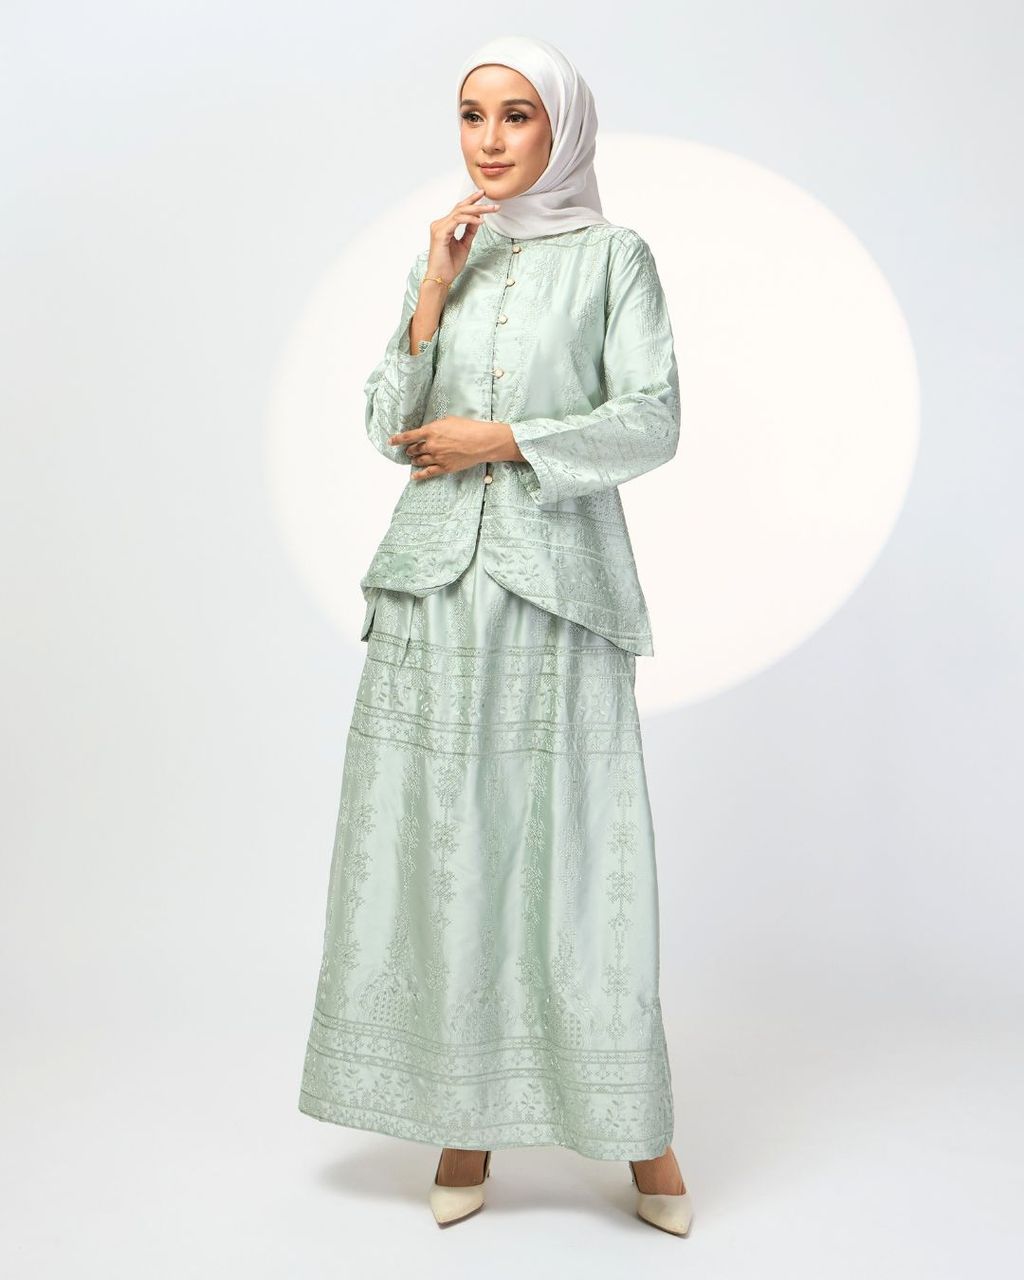 haura-wear-mikayla-skirt-set-sulam-embroidery-pario-klasik-tradisional-mini kebaya-fabrik eyelet-raya-muslimah-long-sleeve-baju-skirt-kain-perempuan-baju-sepasang (29)